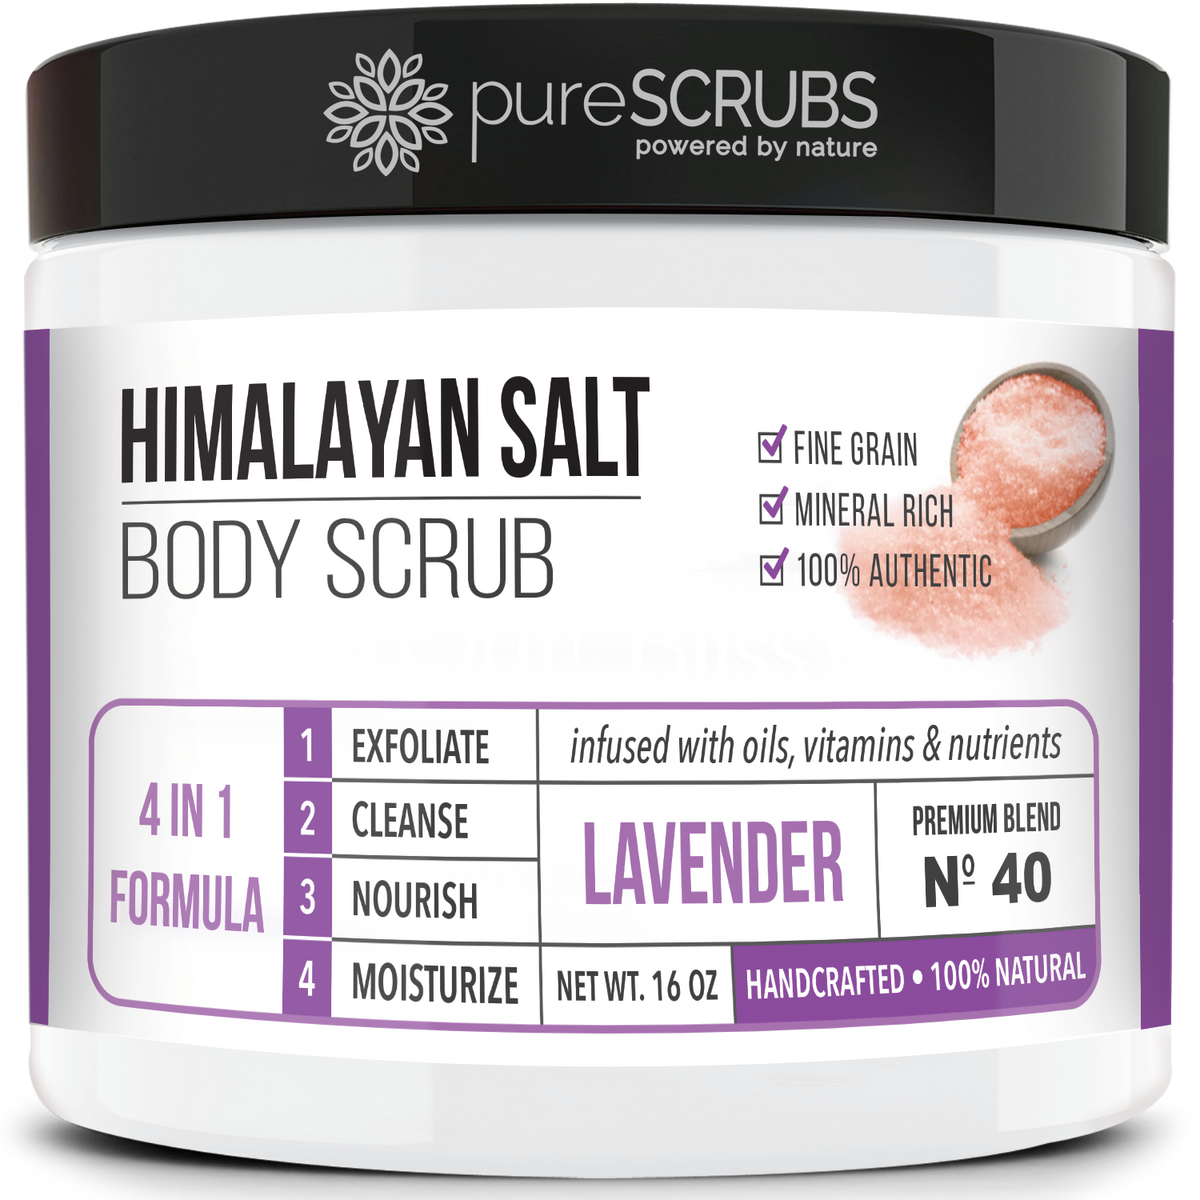 Lavender Body Scrub / Pink Himalayan Salt / Premium Blend #40